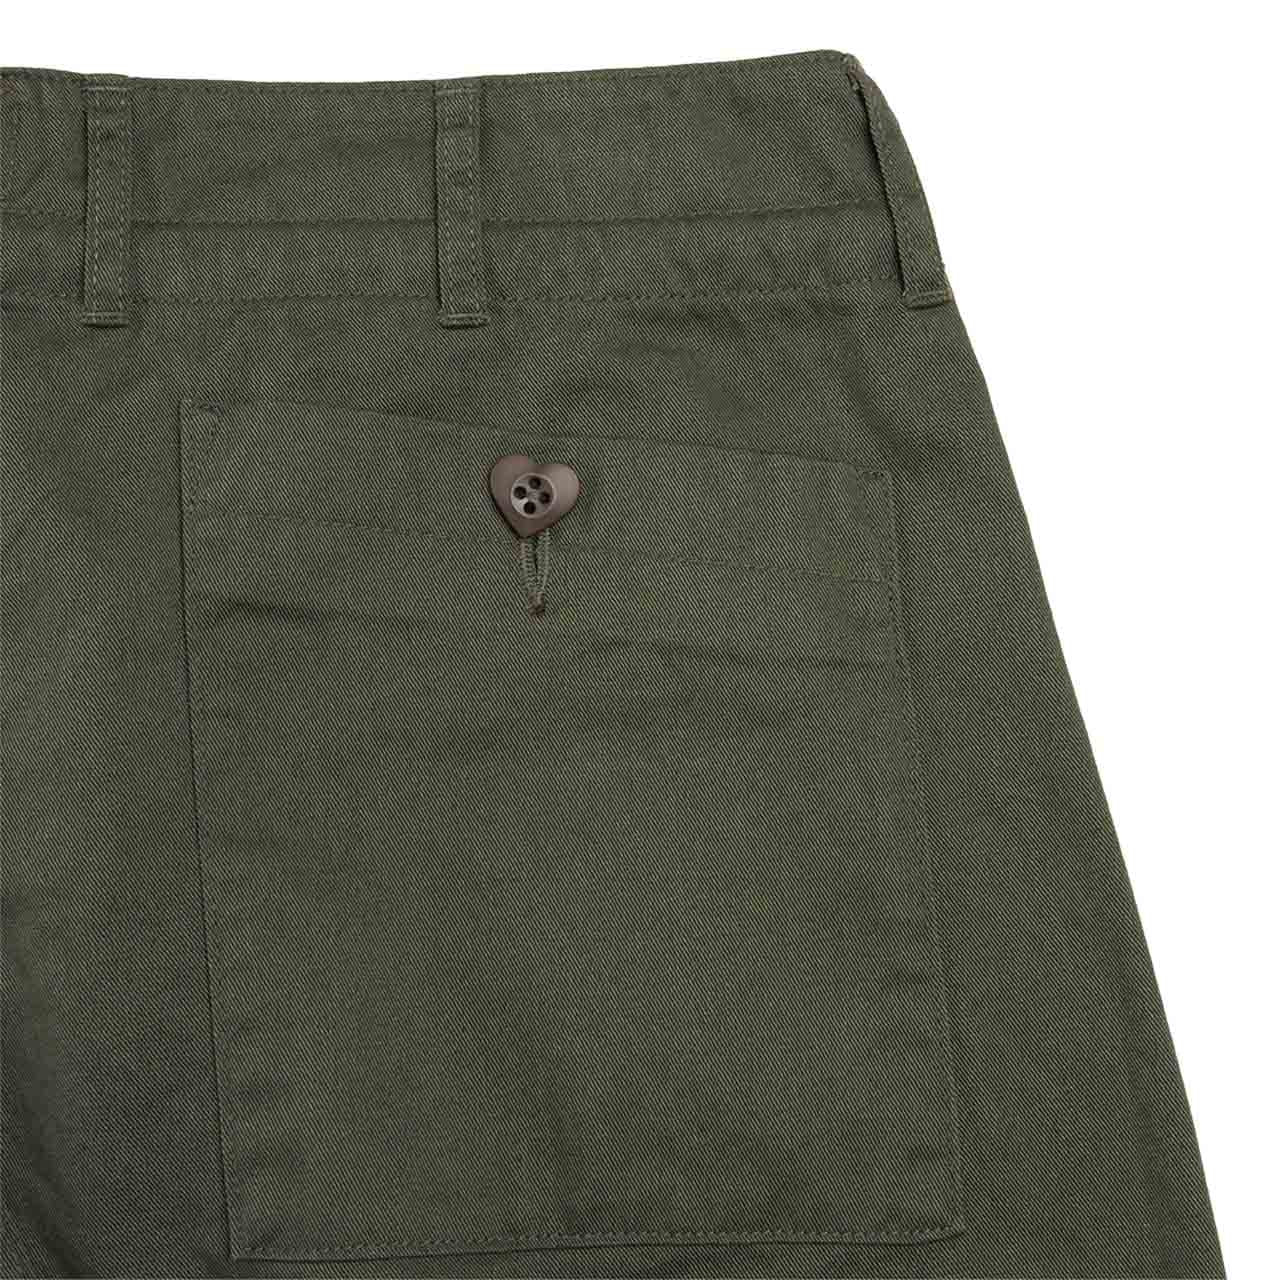 human made military easy pants (oliv)